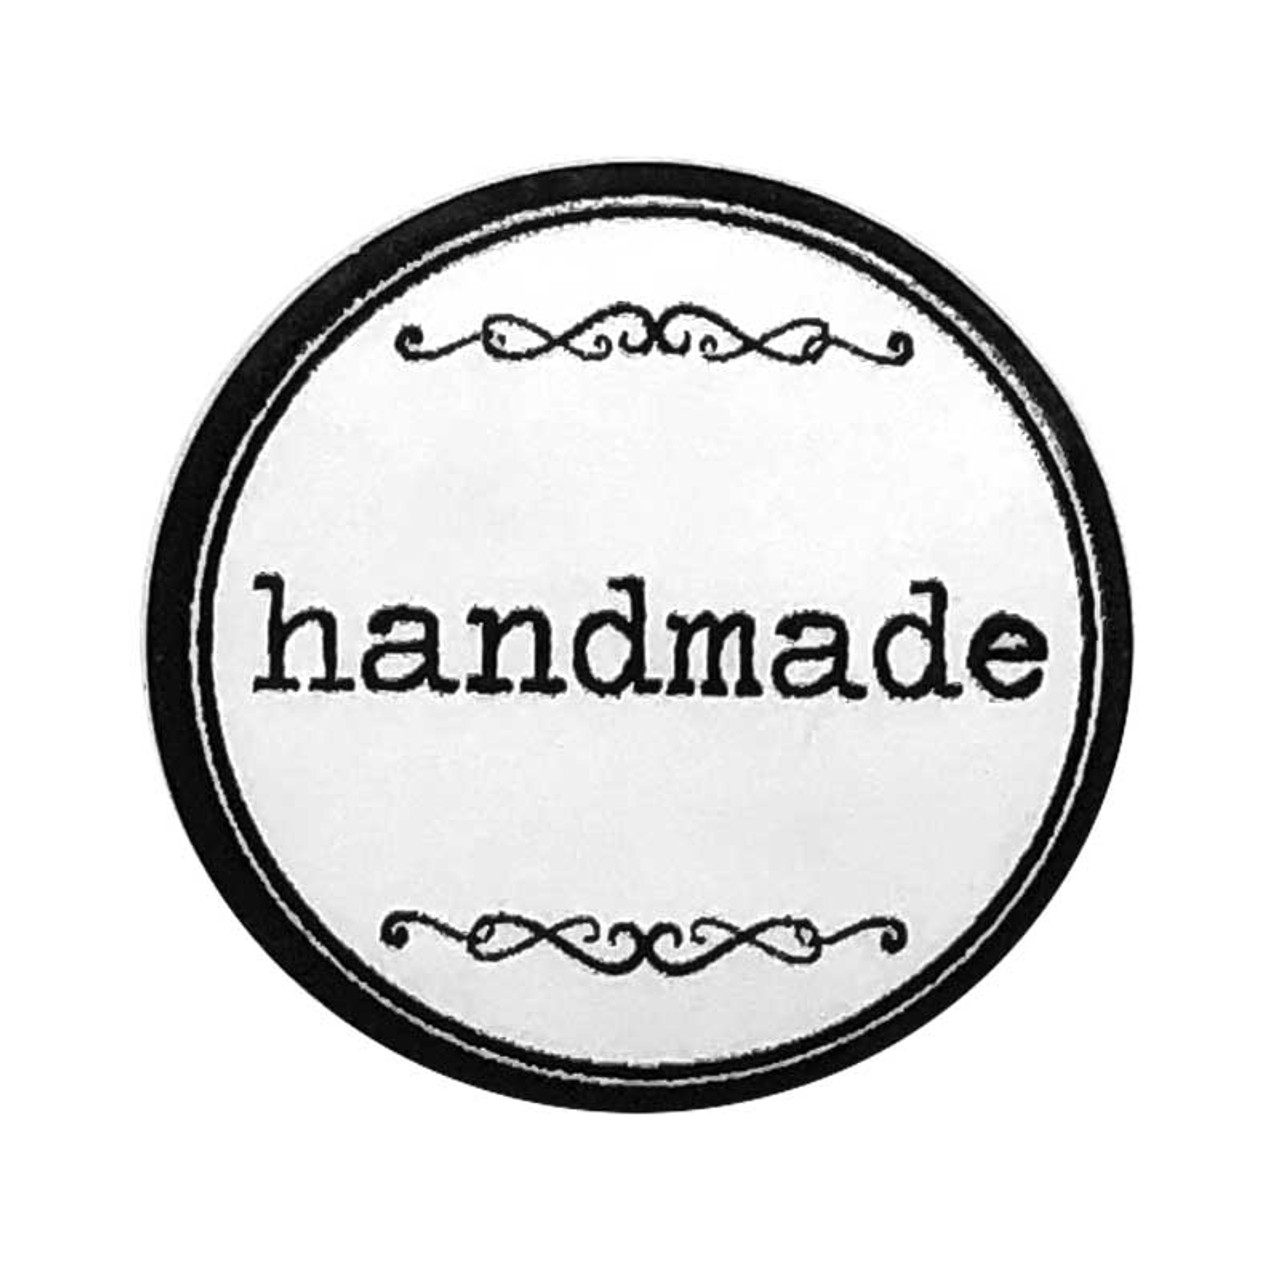 Handmade labels - per 200